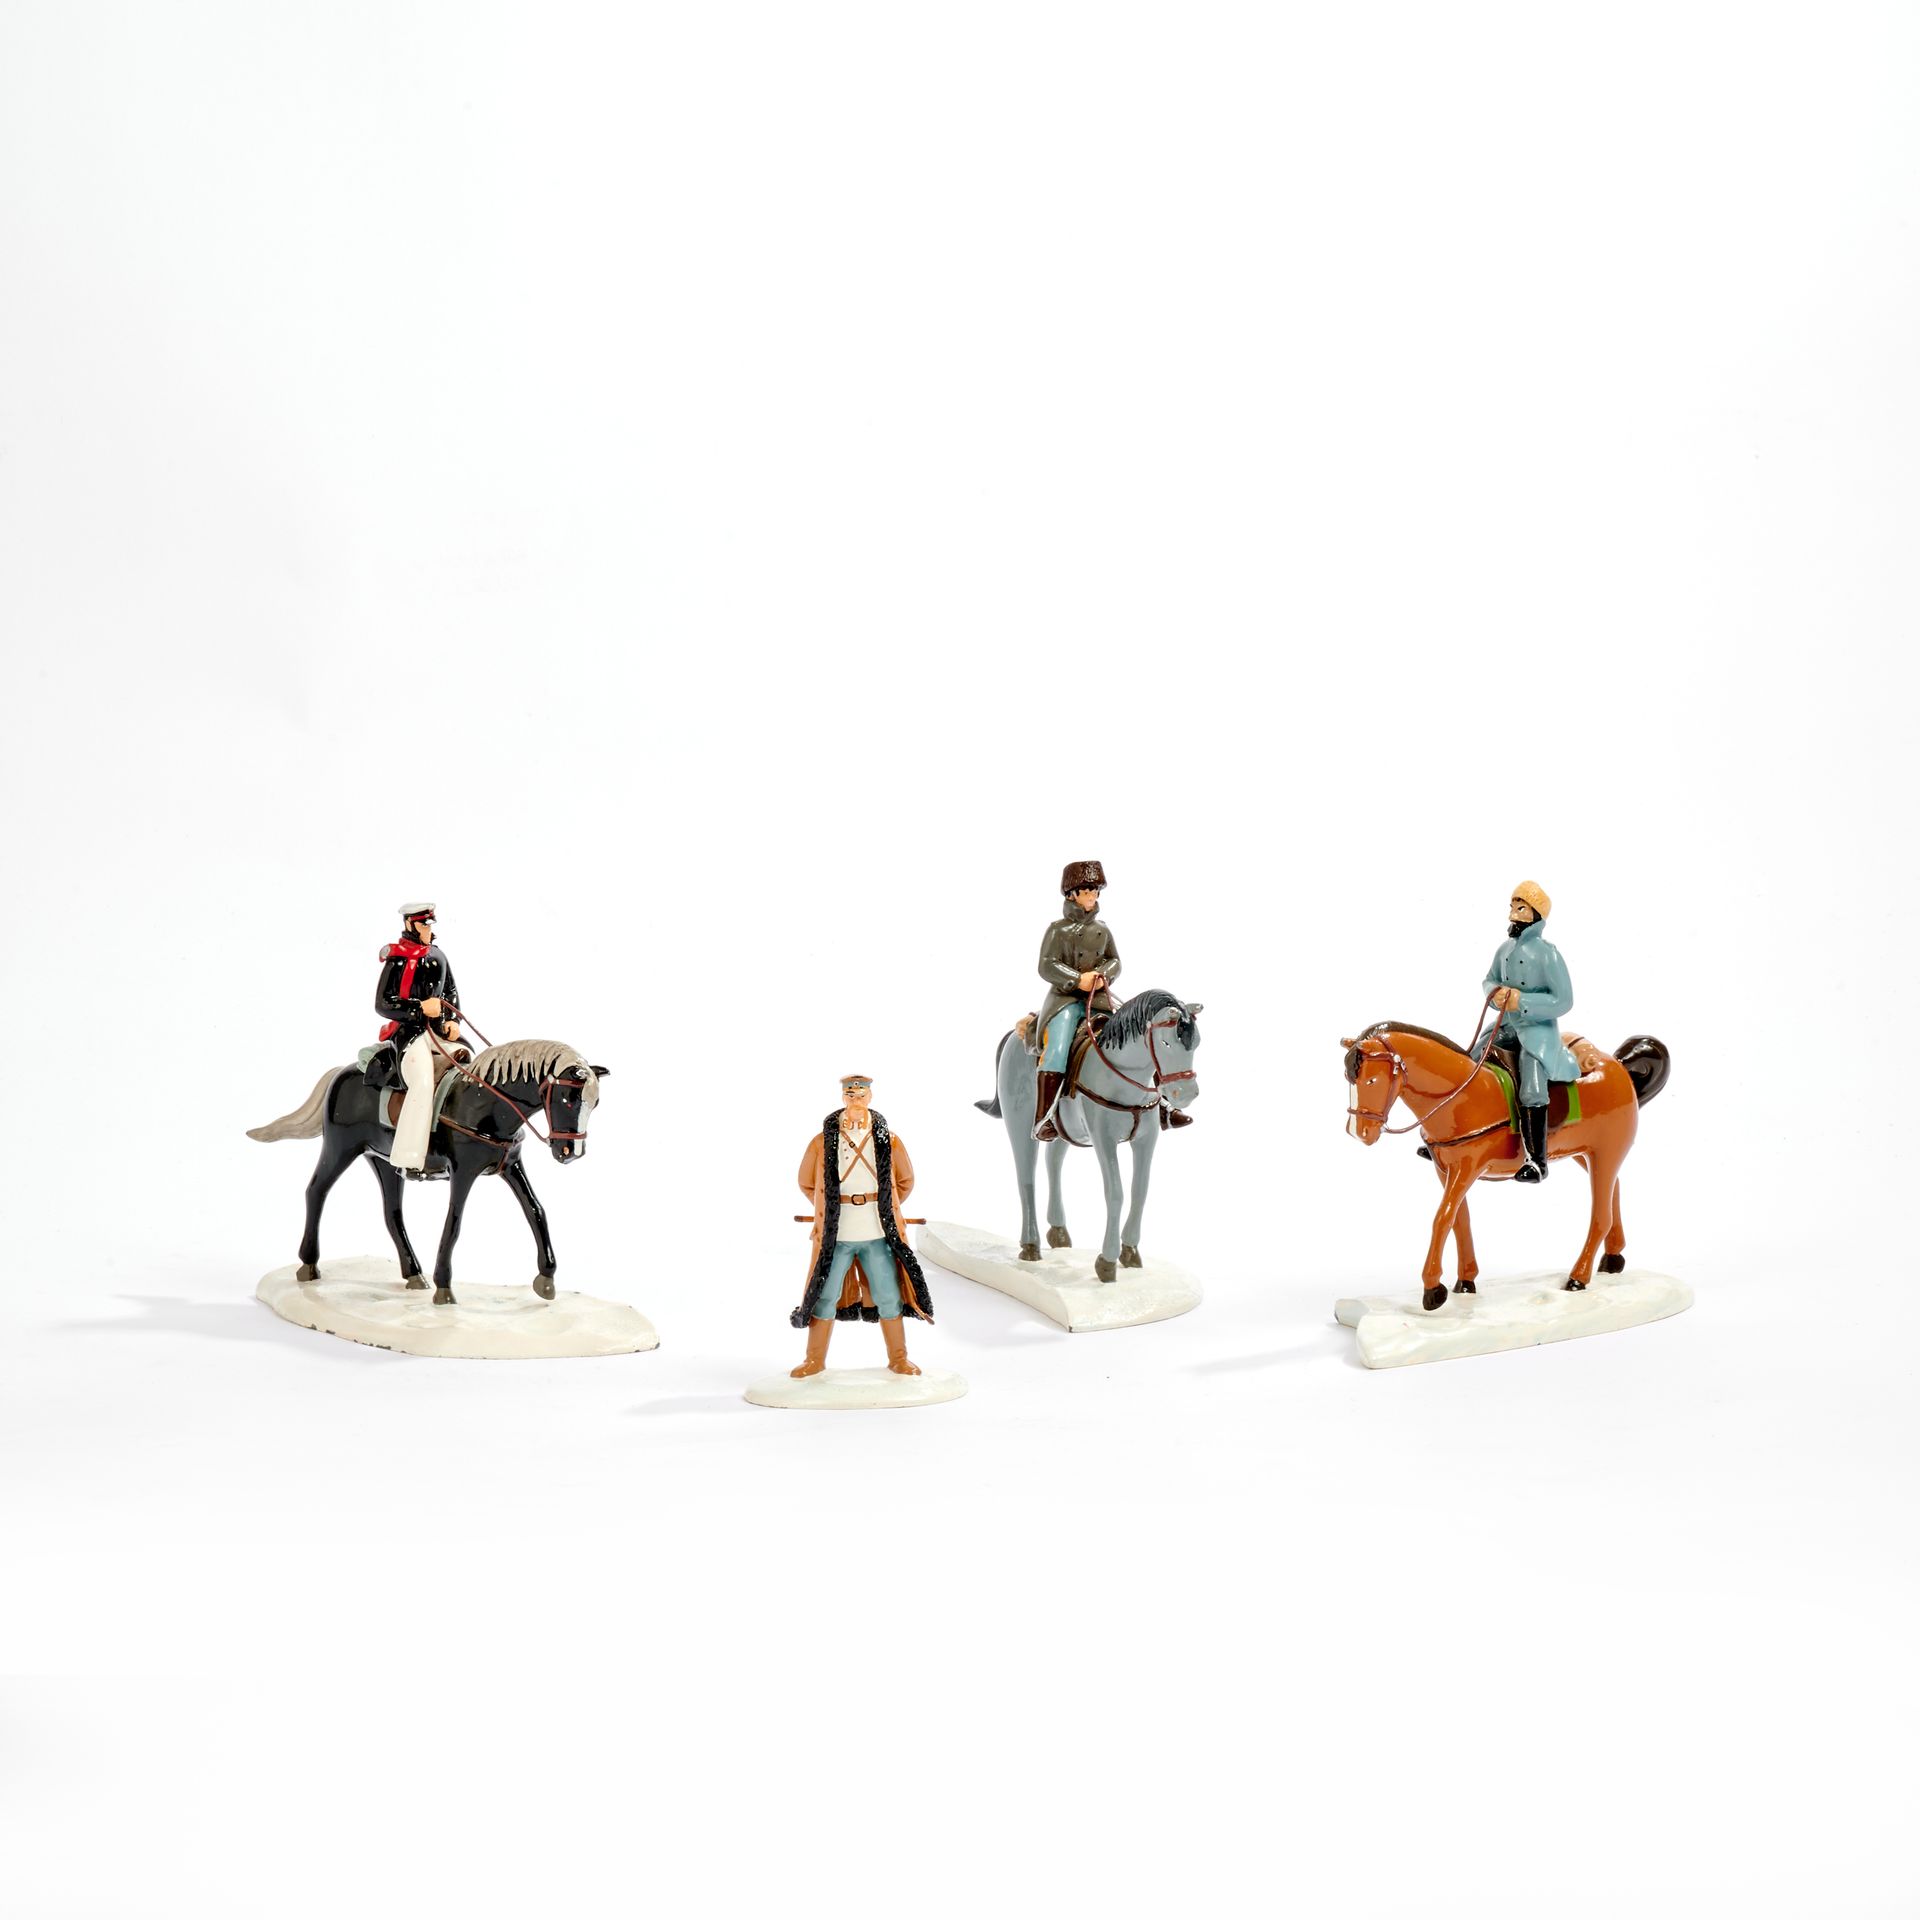 Null PIXI, Corto Maltese.
Coffret d'origine contenant quatre figurines en métal &hellip;